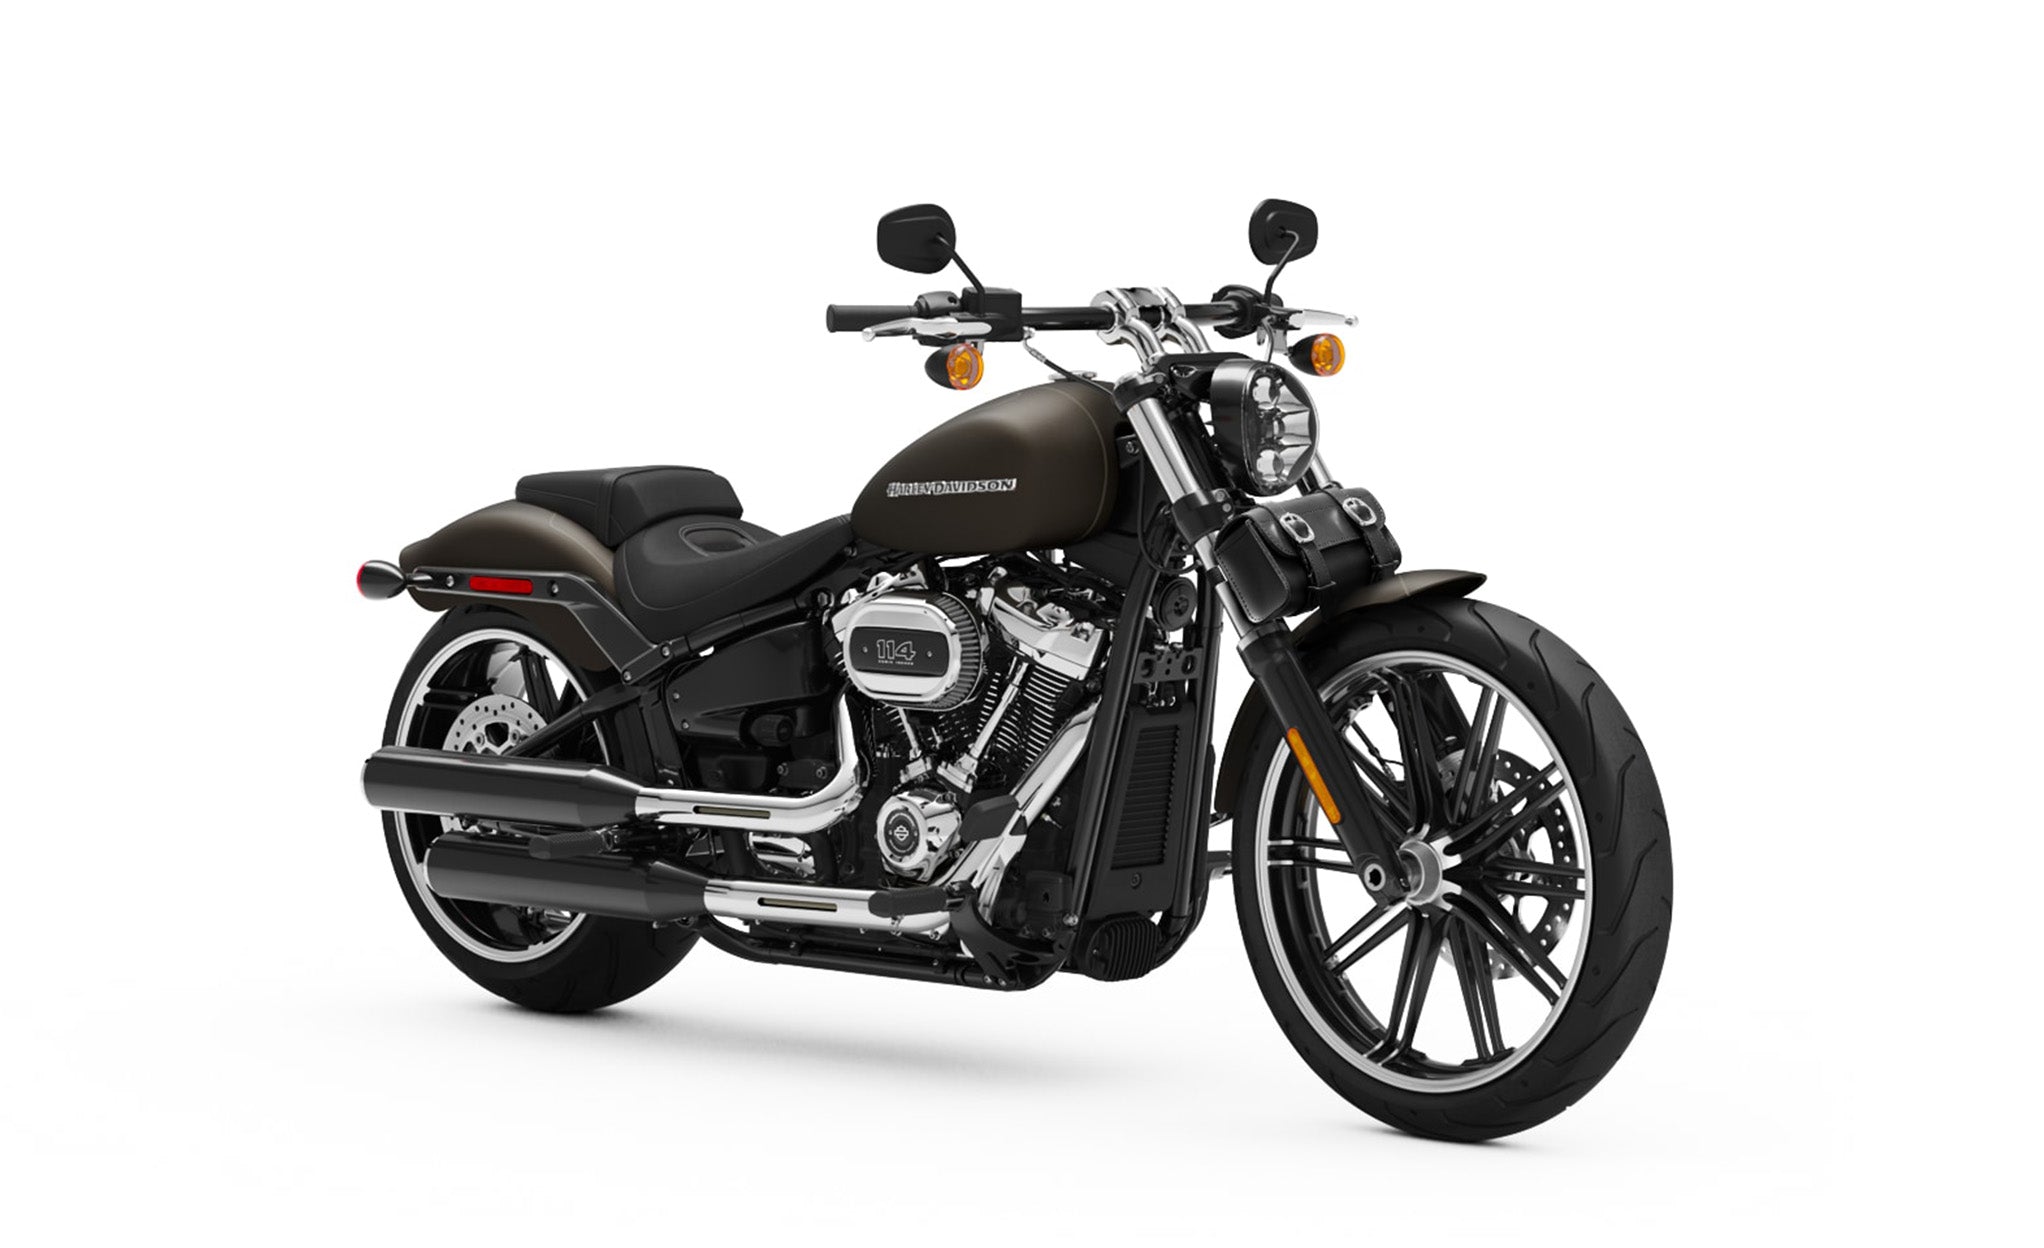 Viking Armor Plain Leather Motorcycle Fork Bag for Harley Davidson Bag on Bike View @expand